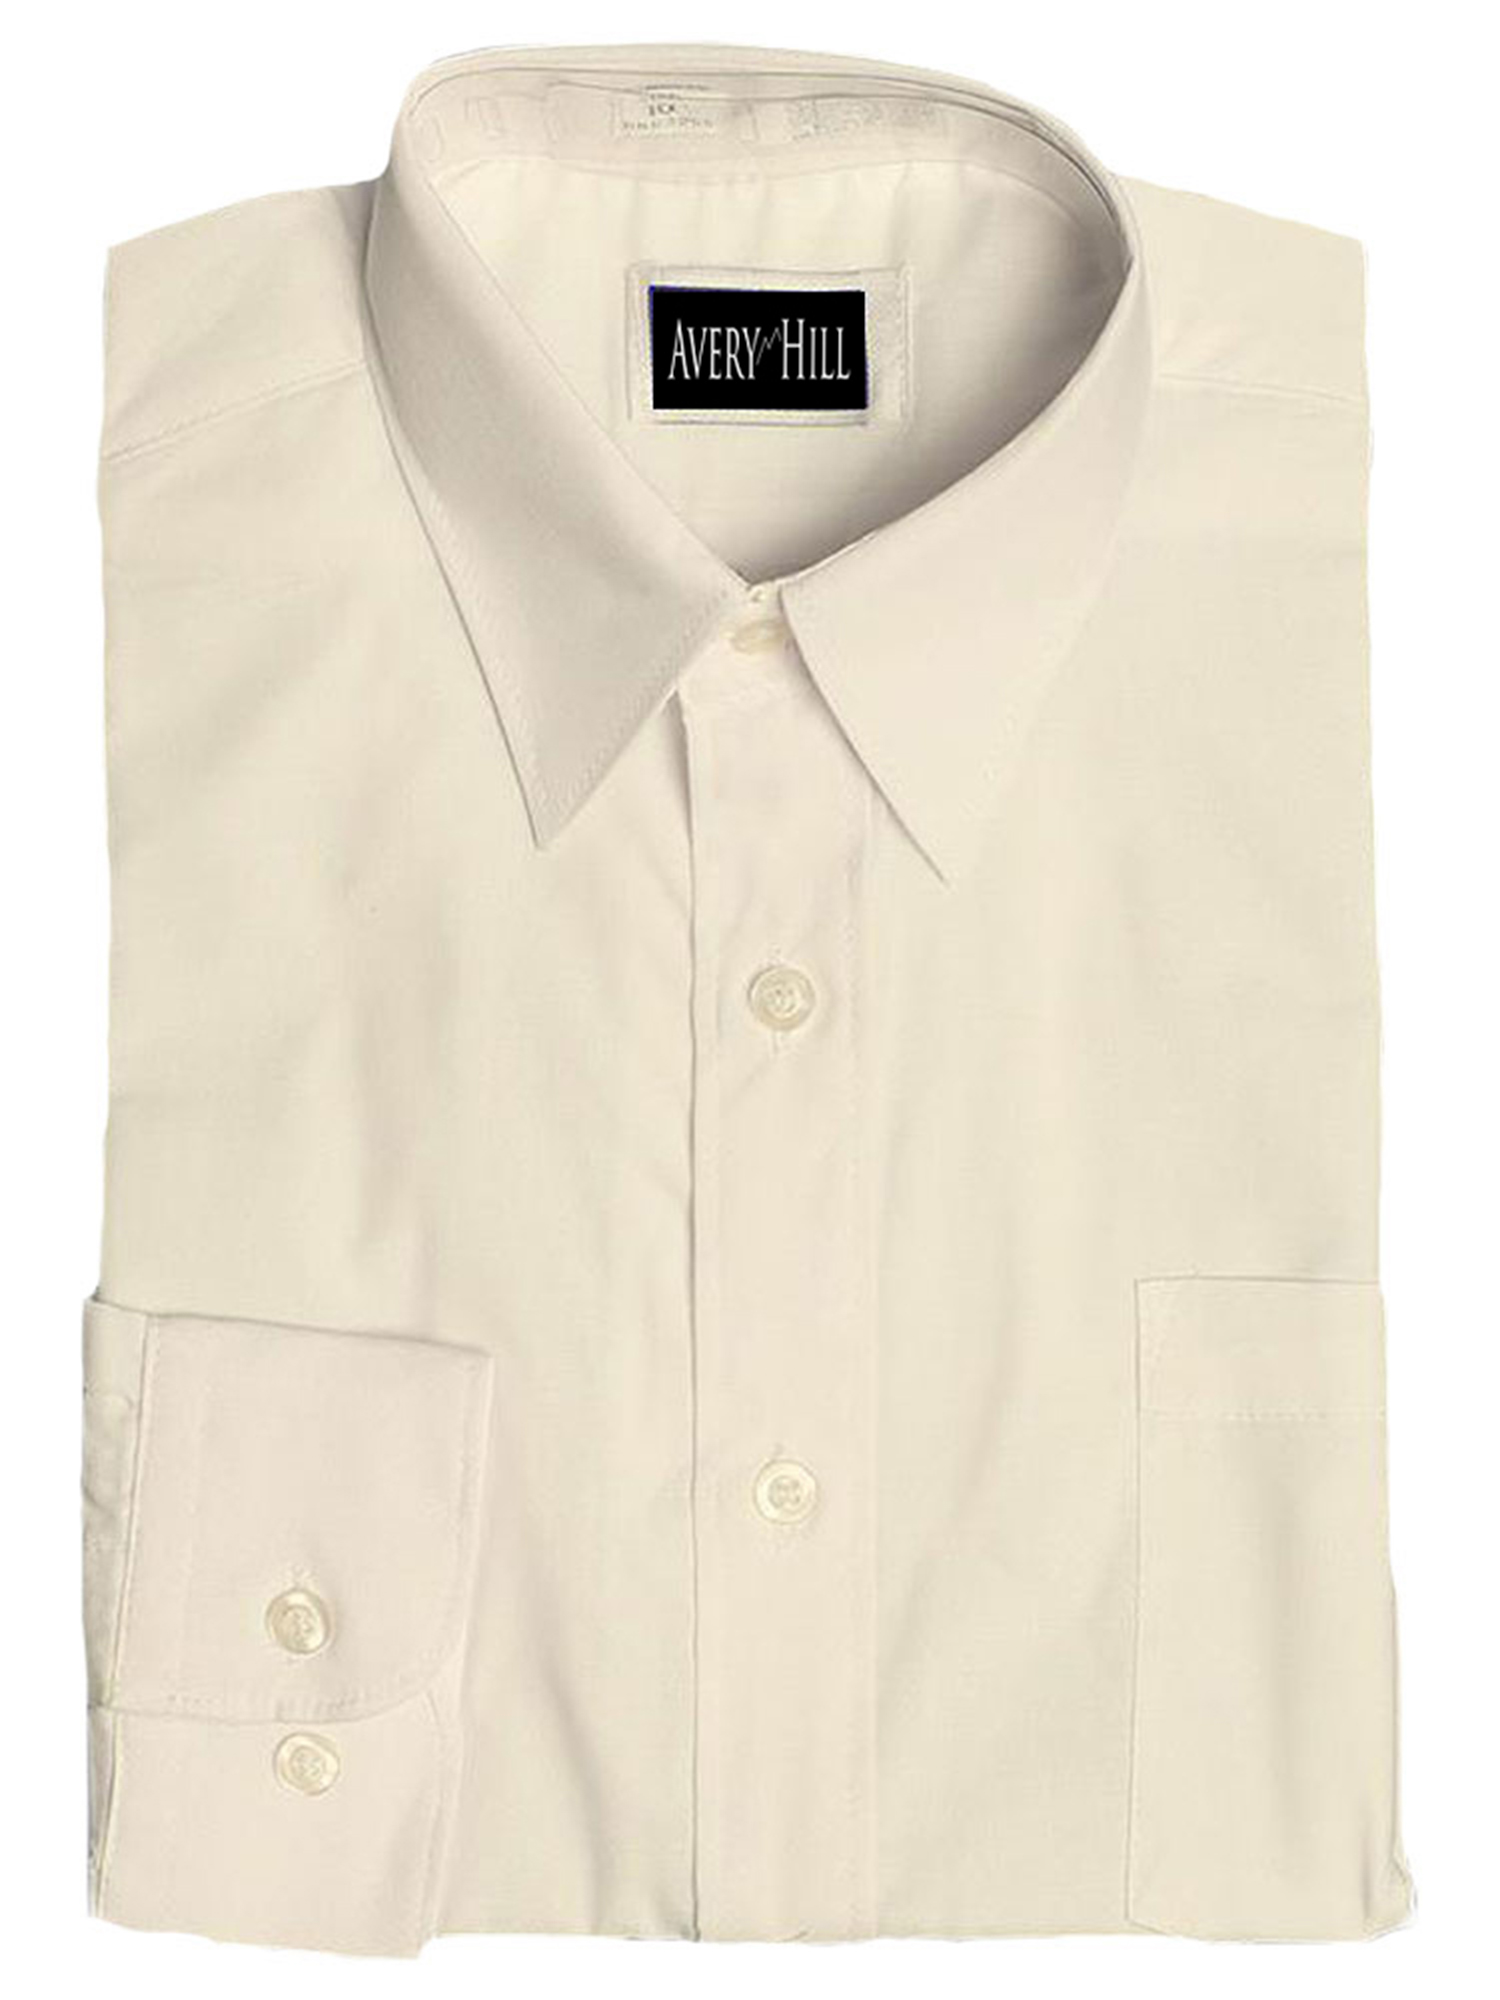 Boys White or Ivory Long Sleeve Wrinkle Resistant Dress Shirt IV 20X